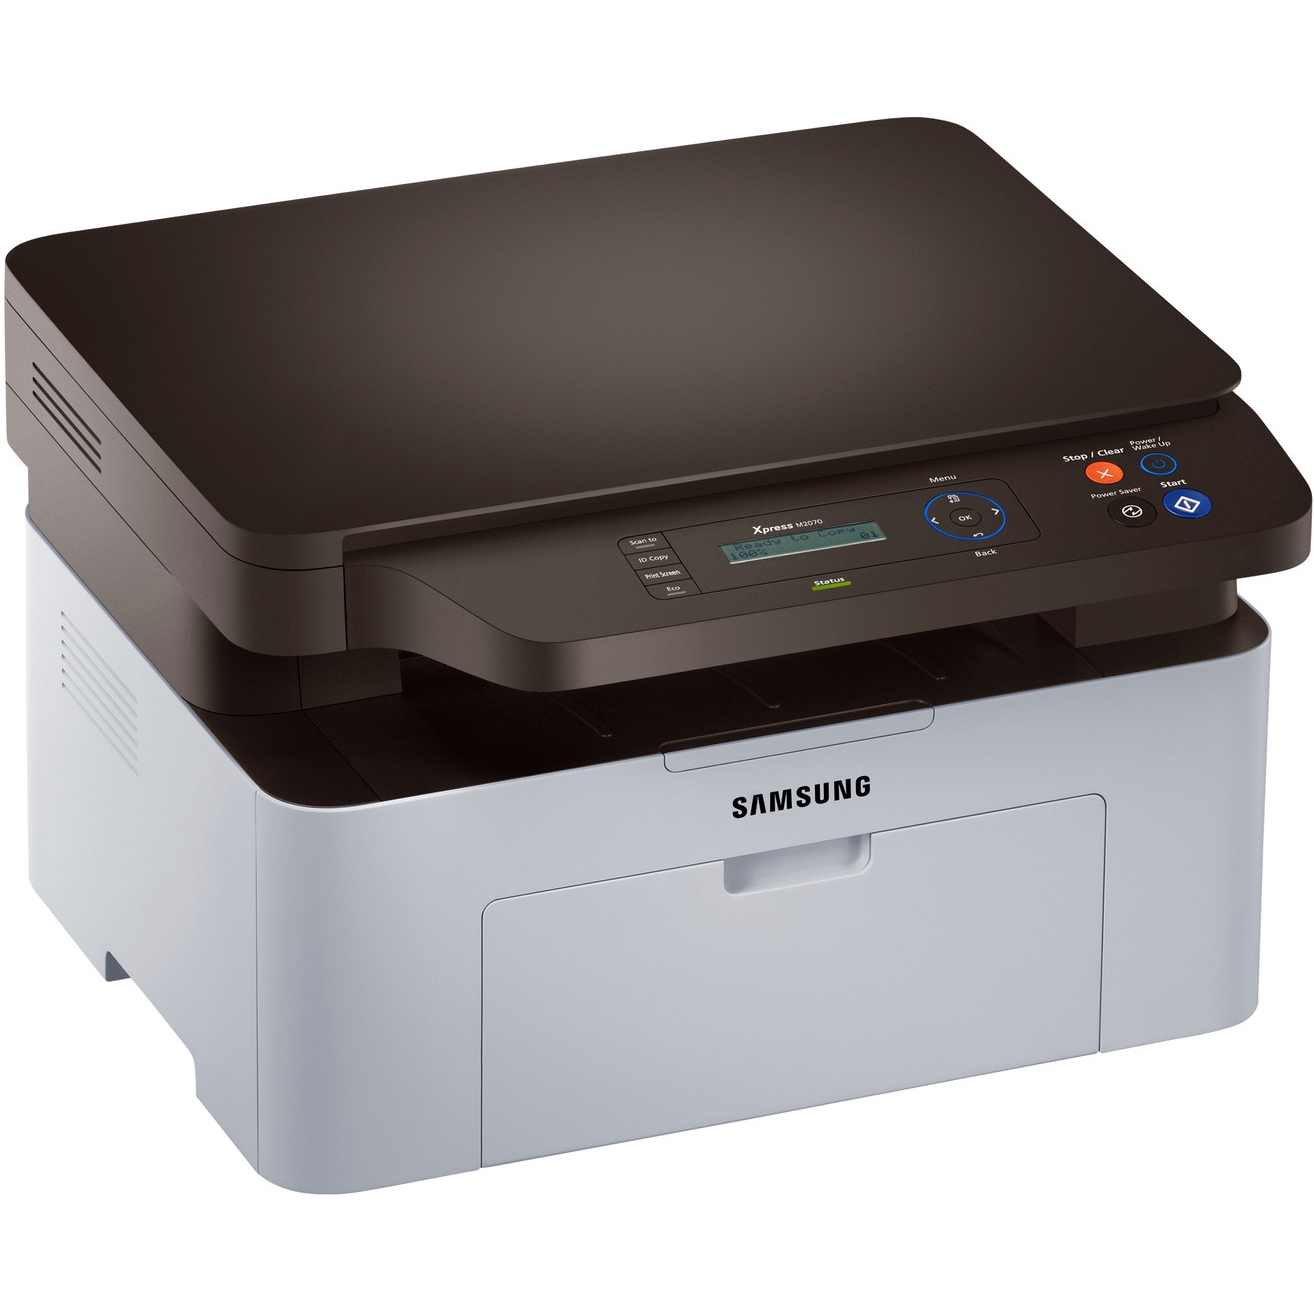 samsung printer xpress m2020 driver download